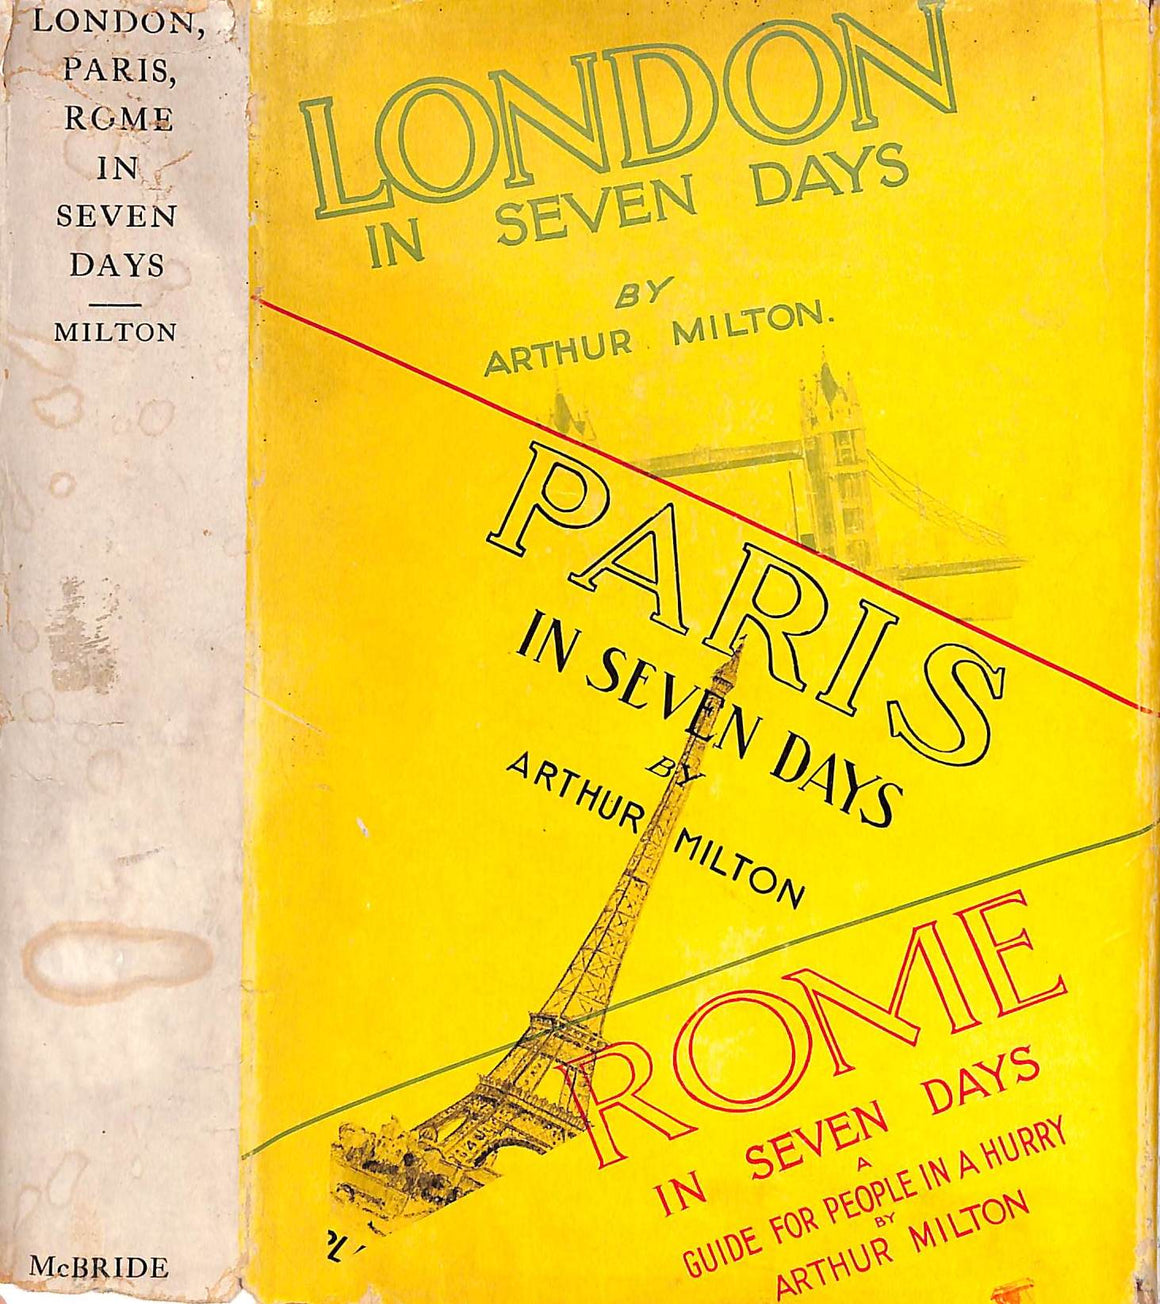 "London, Paris, Rome In Seven Days" 1931 MILTON, Arthur